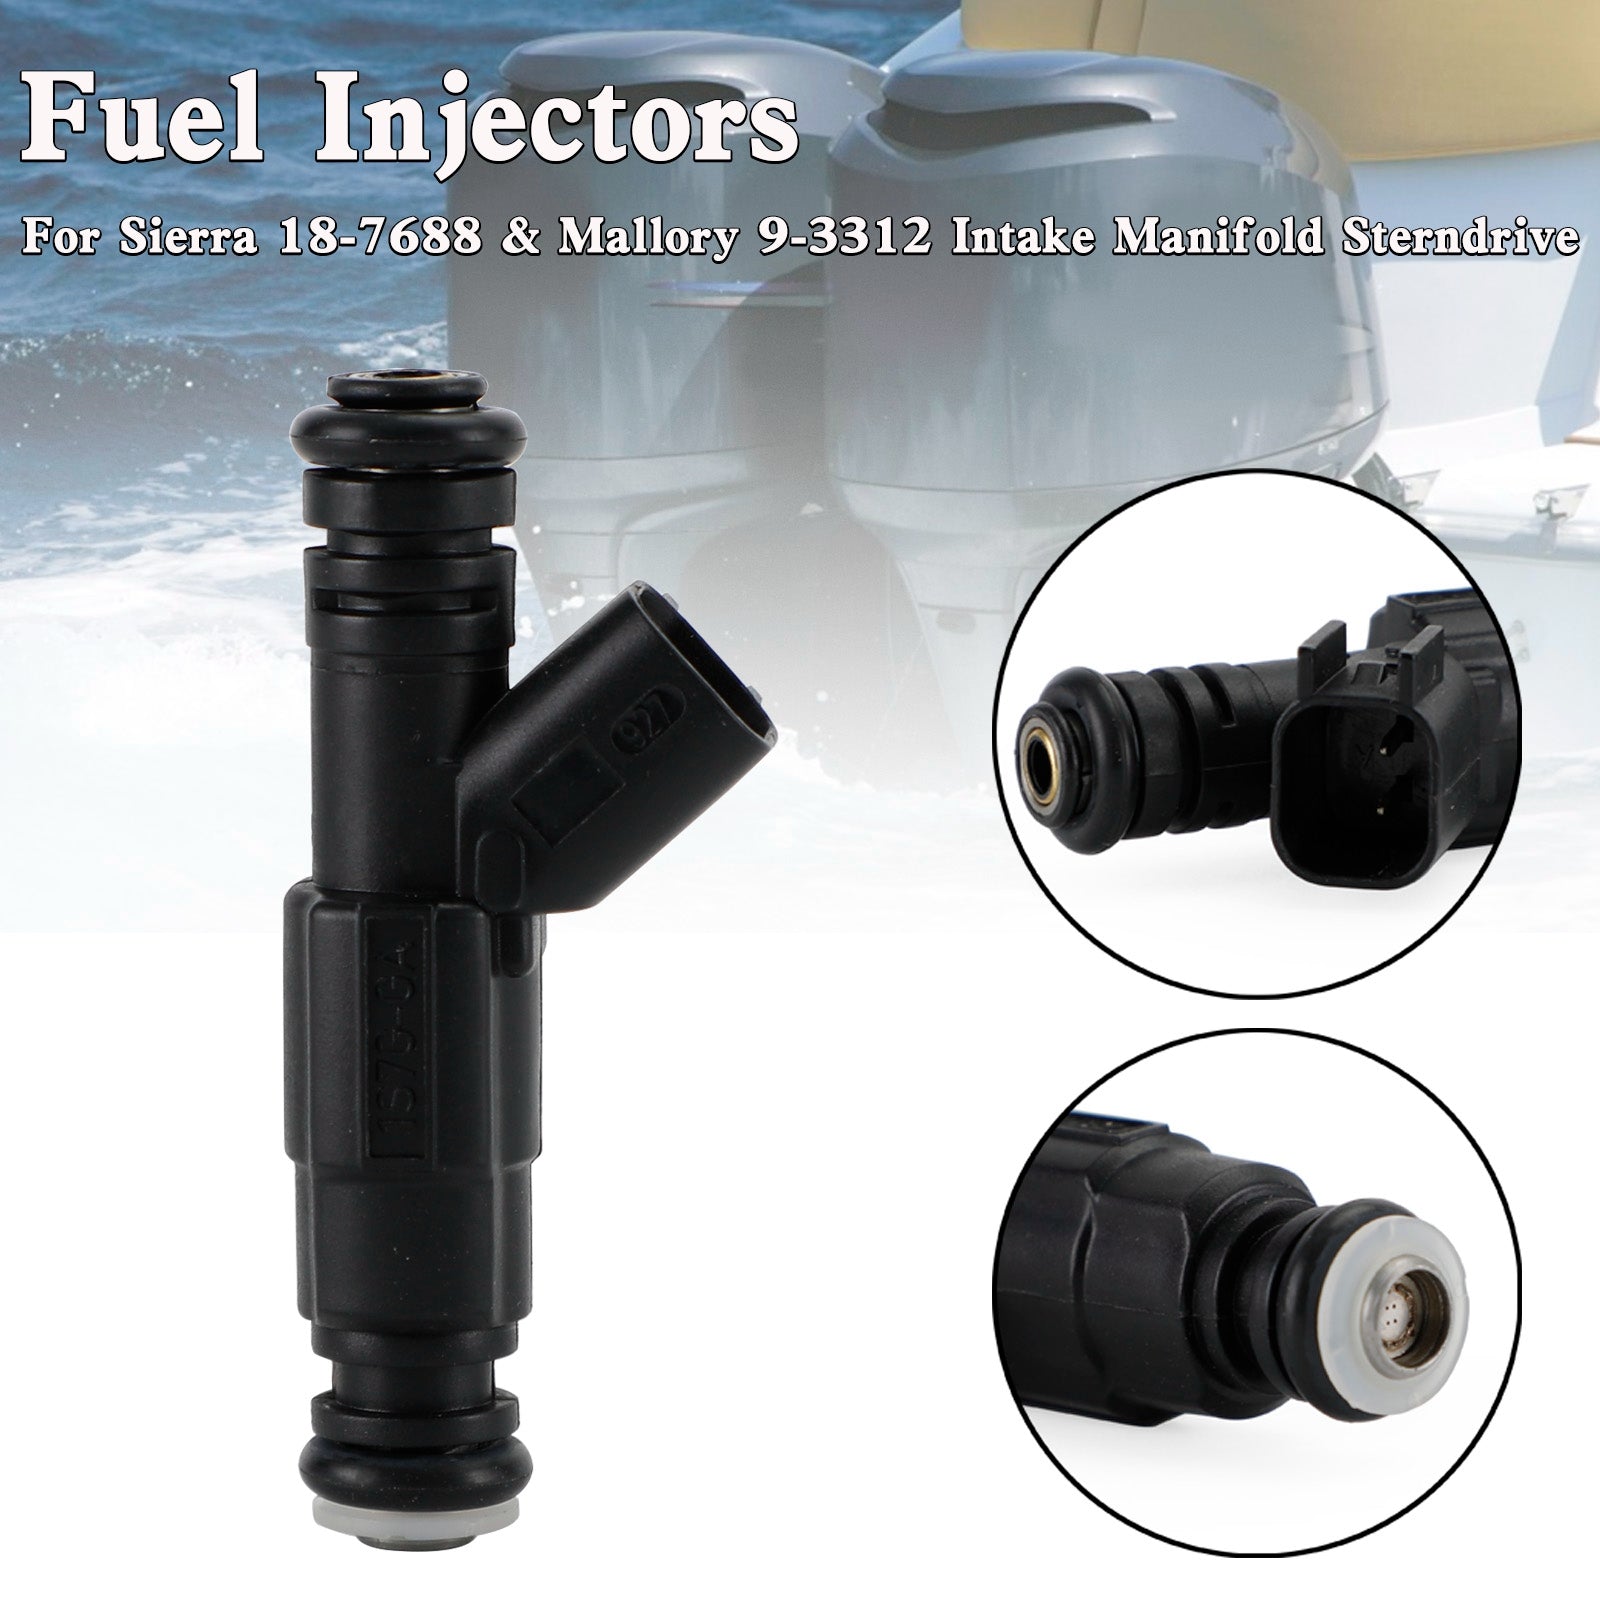 Fuel Injectors For Sierra 18-7688 & Mallory 9-3312 Intake Manifold Sterndrive